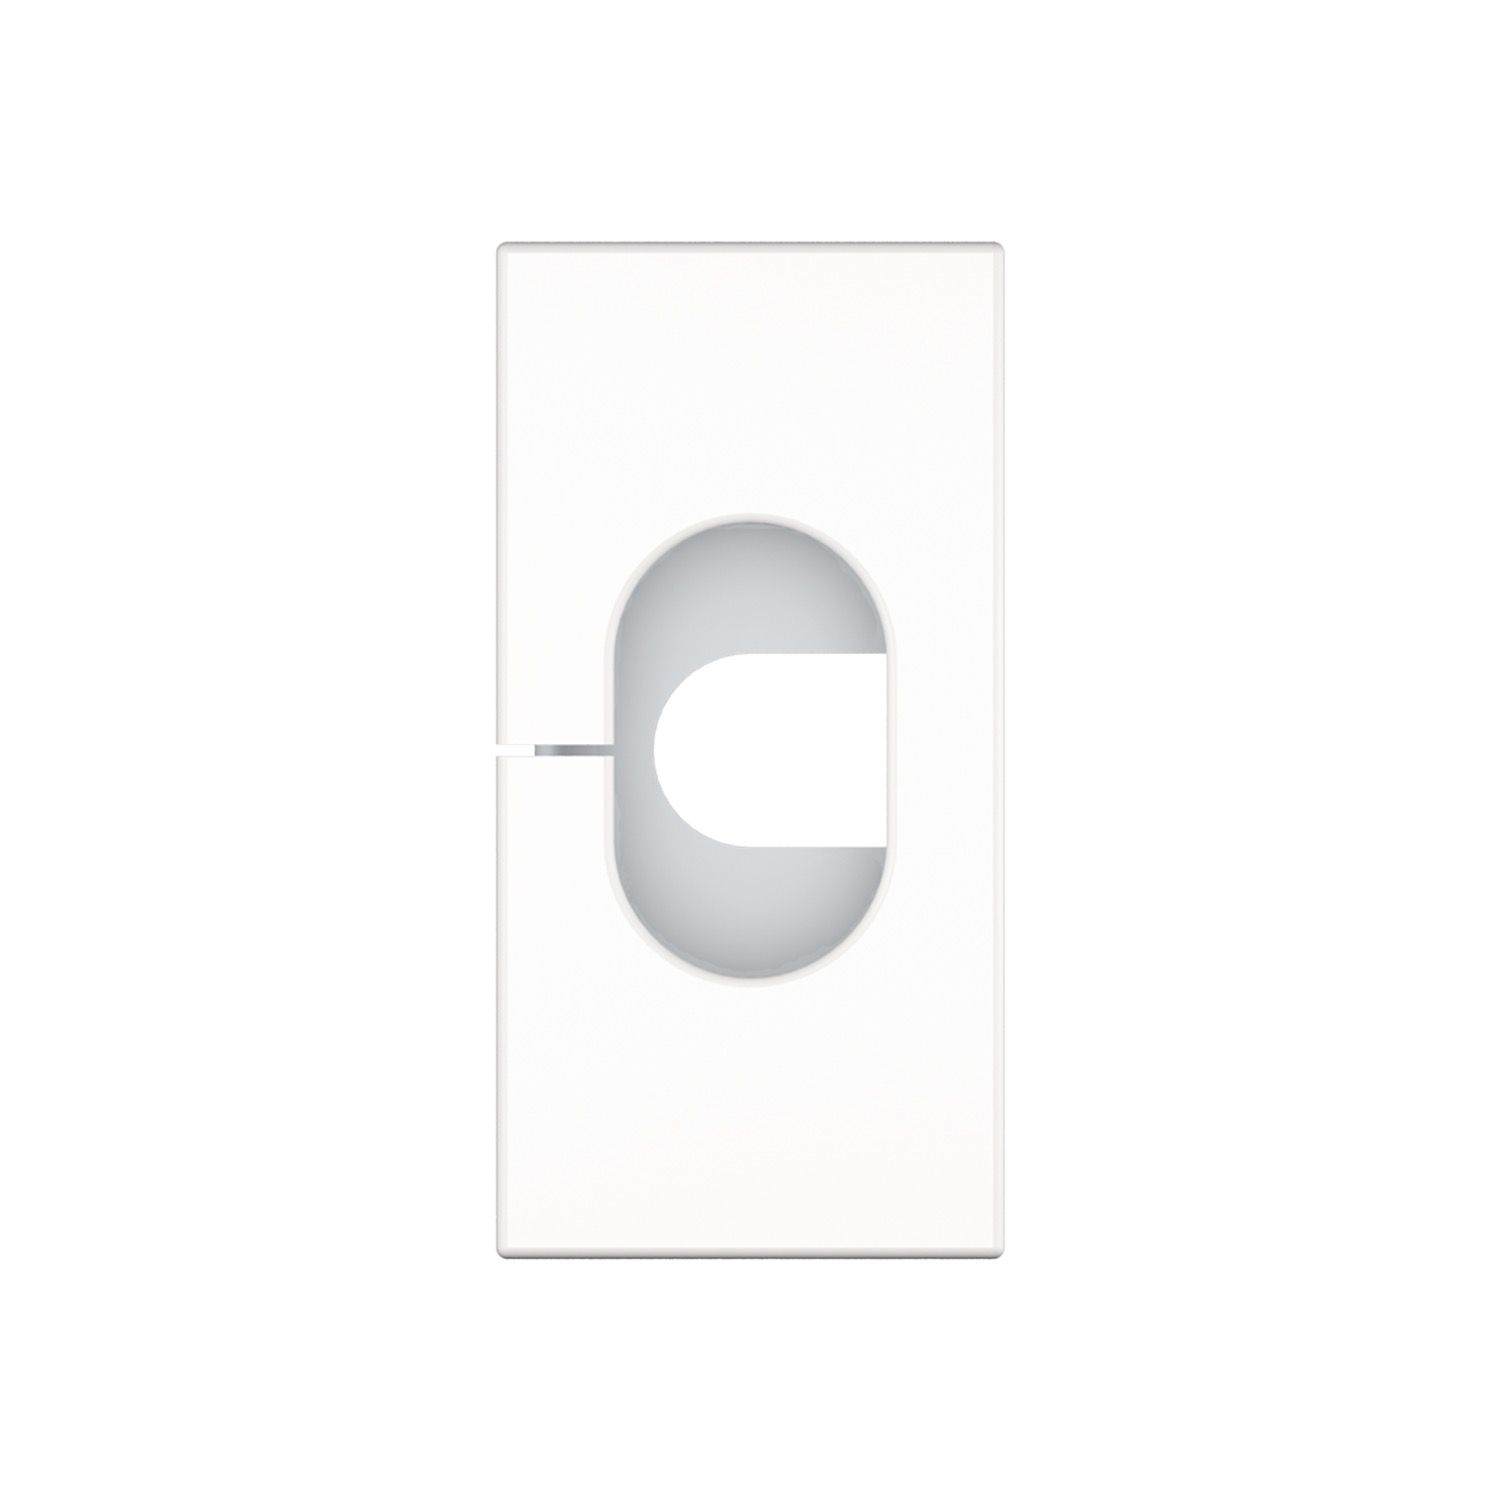 Kindermann Konnect flex 45 click blind panel - cable aperture 8 mm - half panel - white